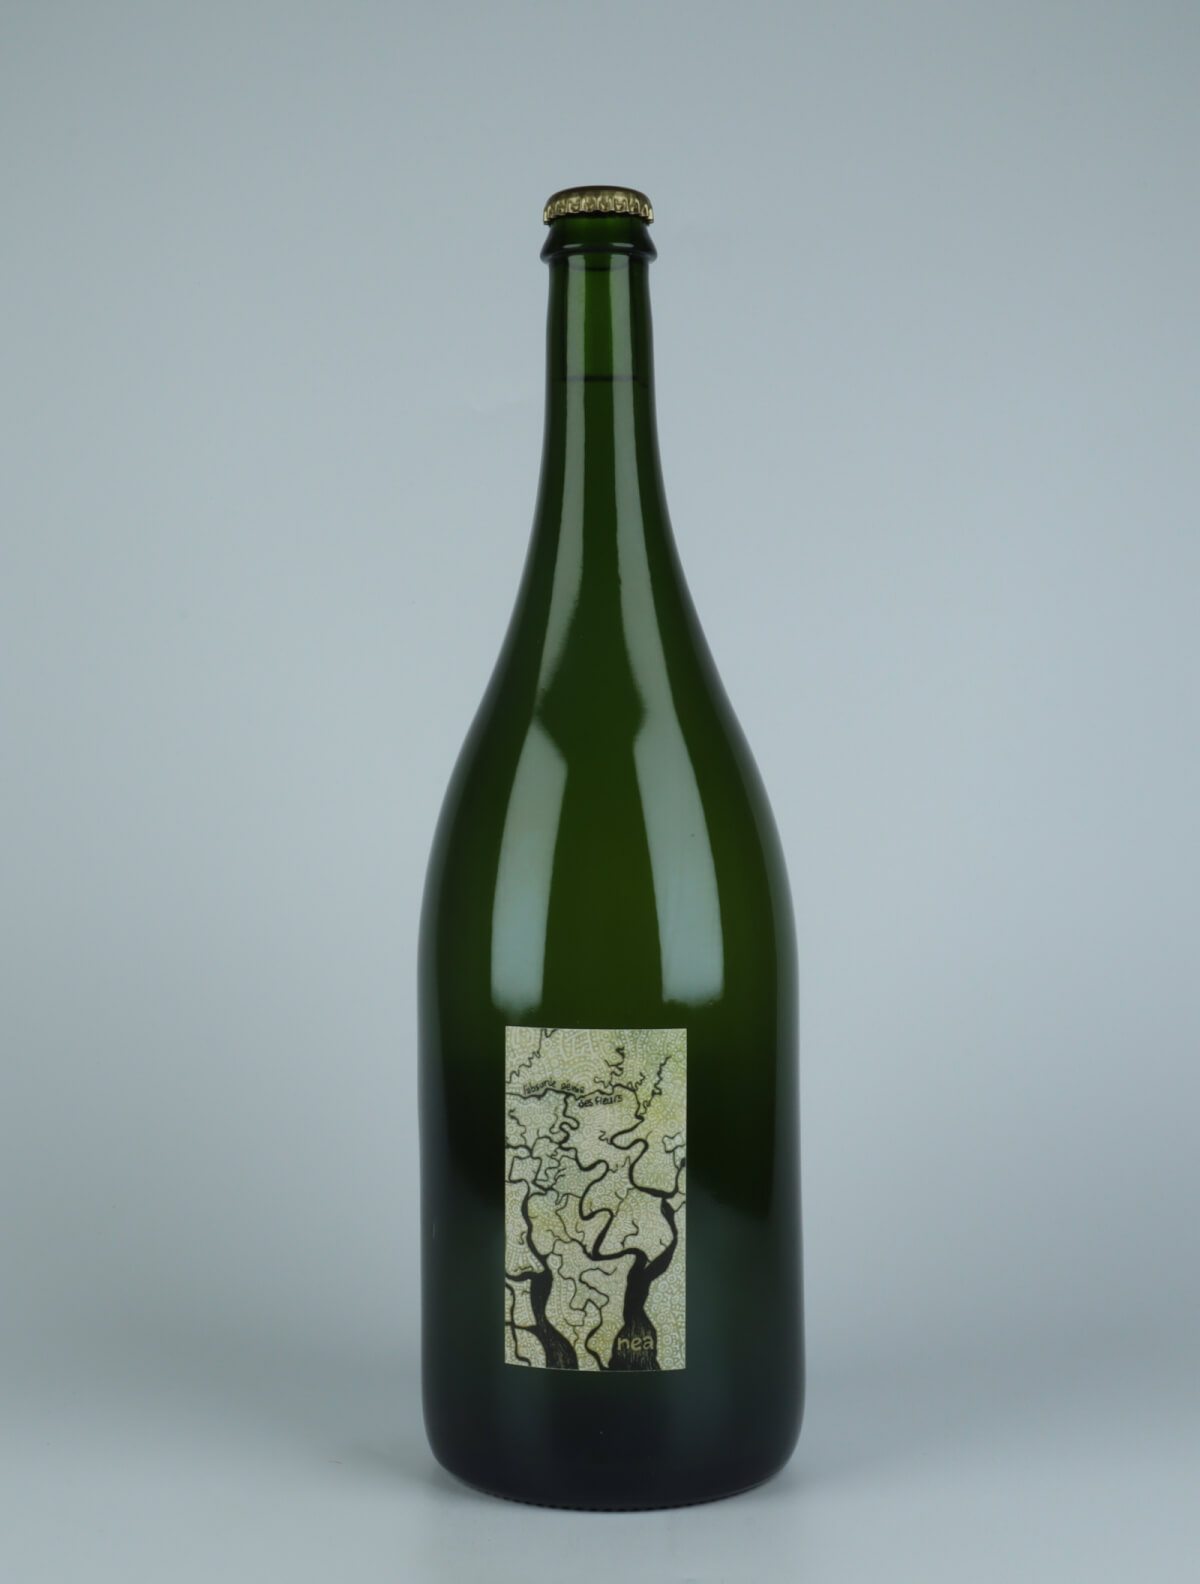 A bottle 2021 Nea - Magnum White wine from Absurde Génie des Fleurs, Languedoc in France